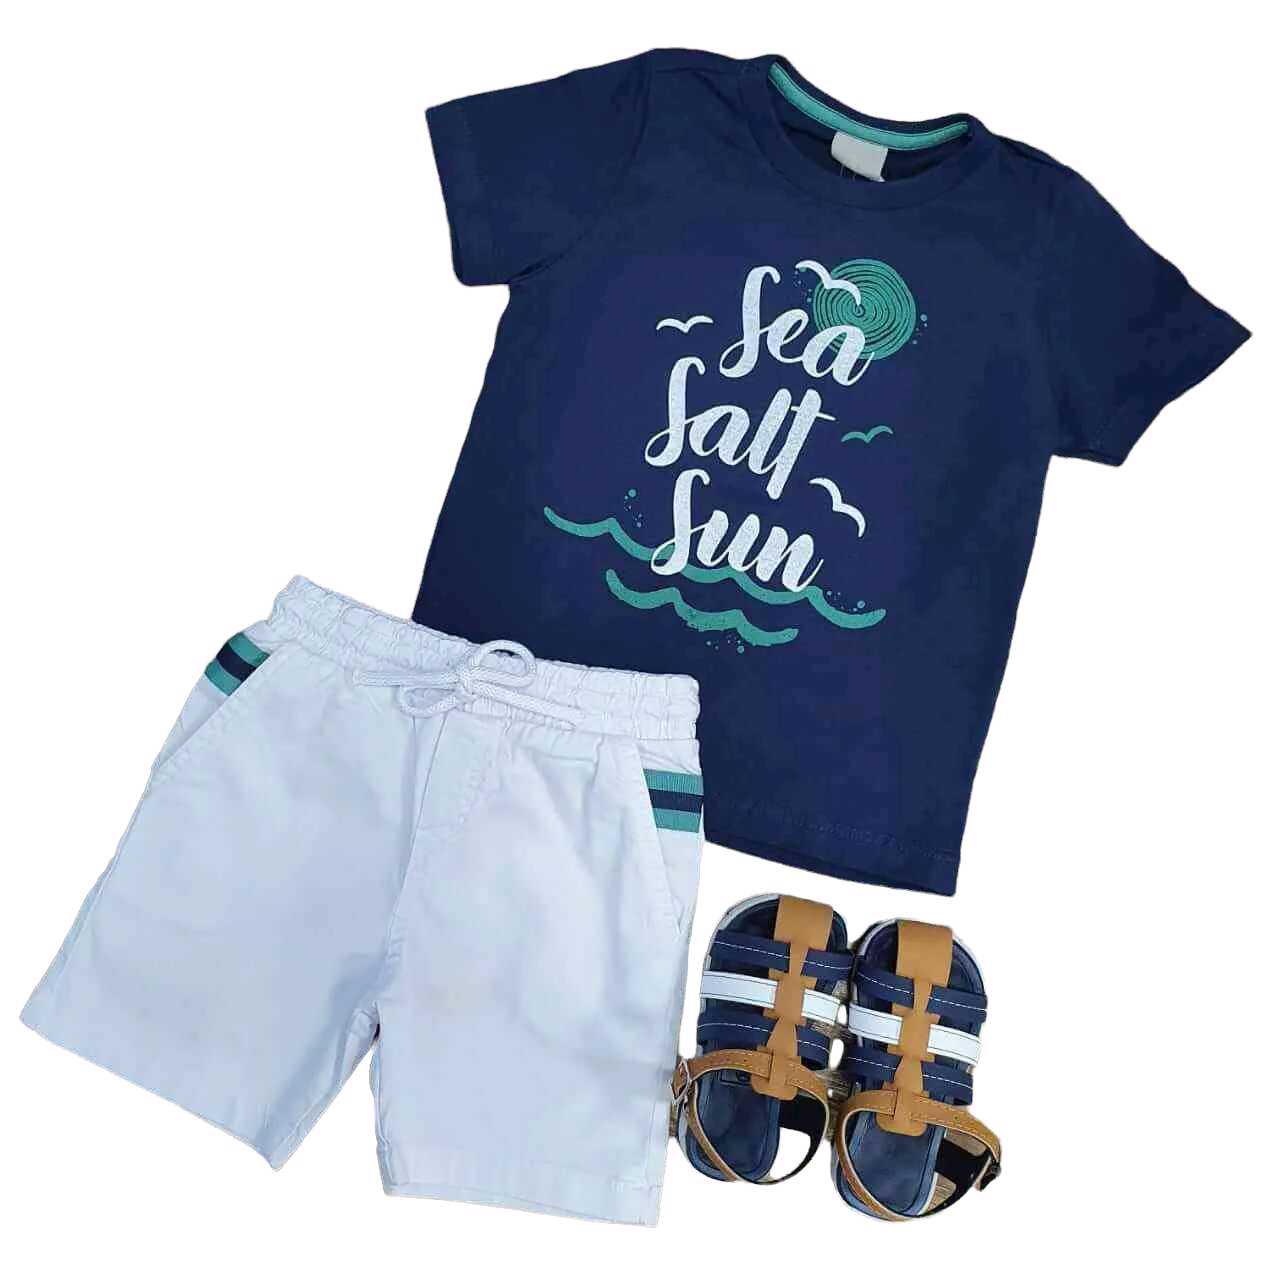 Bermuda Branca com Camiseta Sea Salt Sun Infantil - Lojinha da Vivi